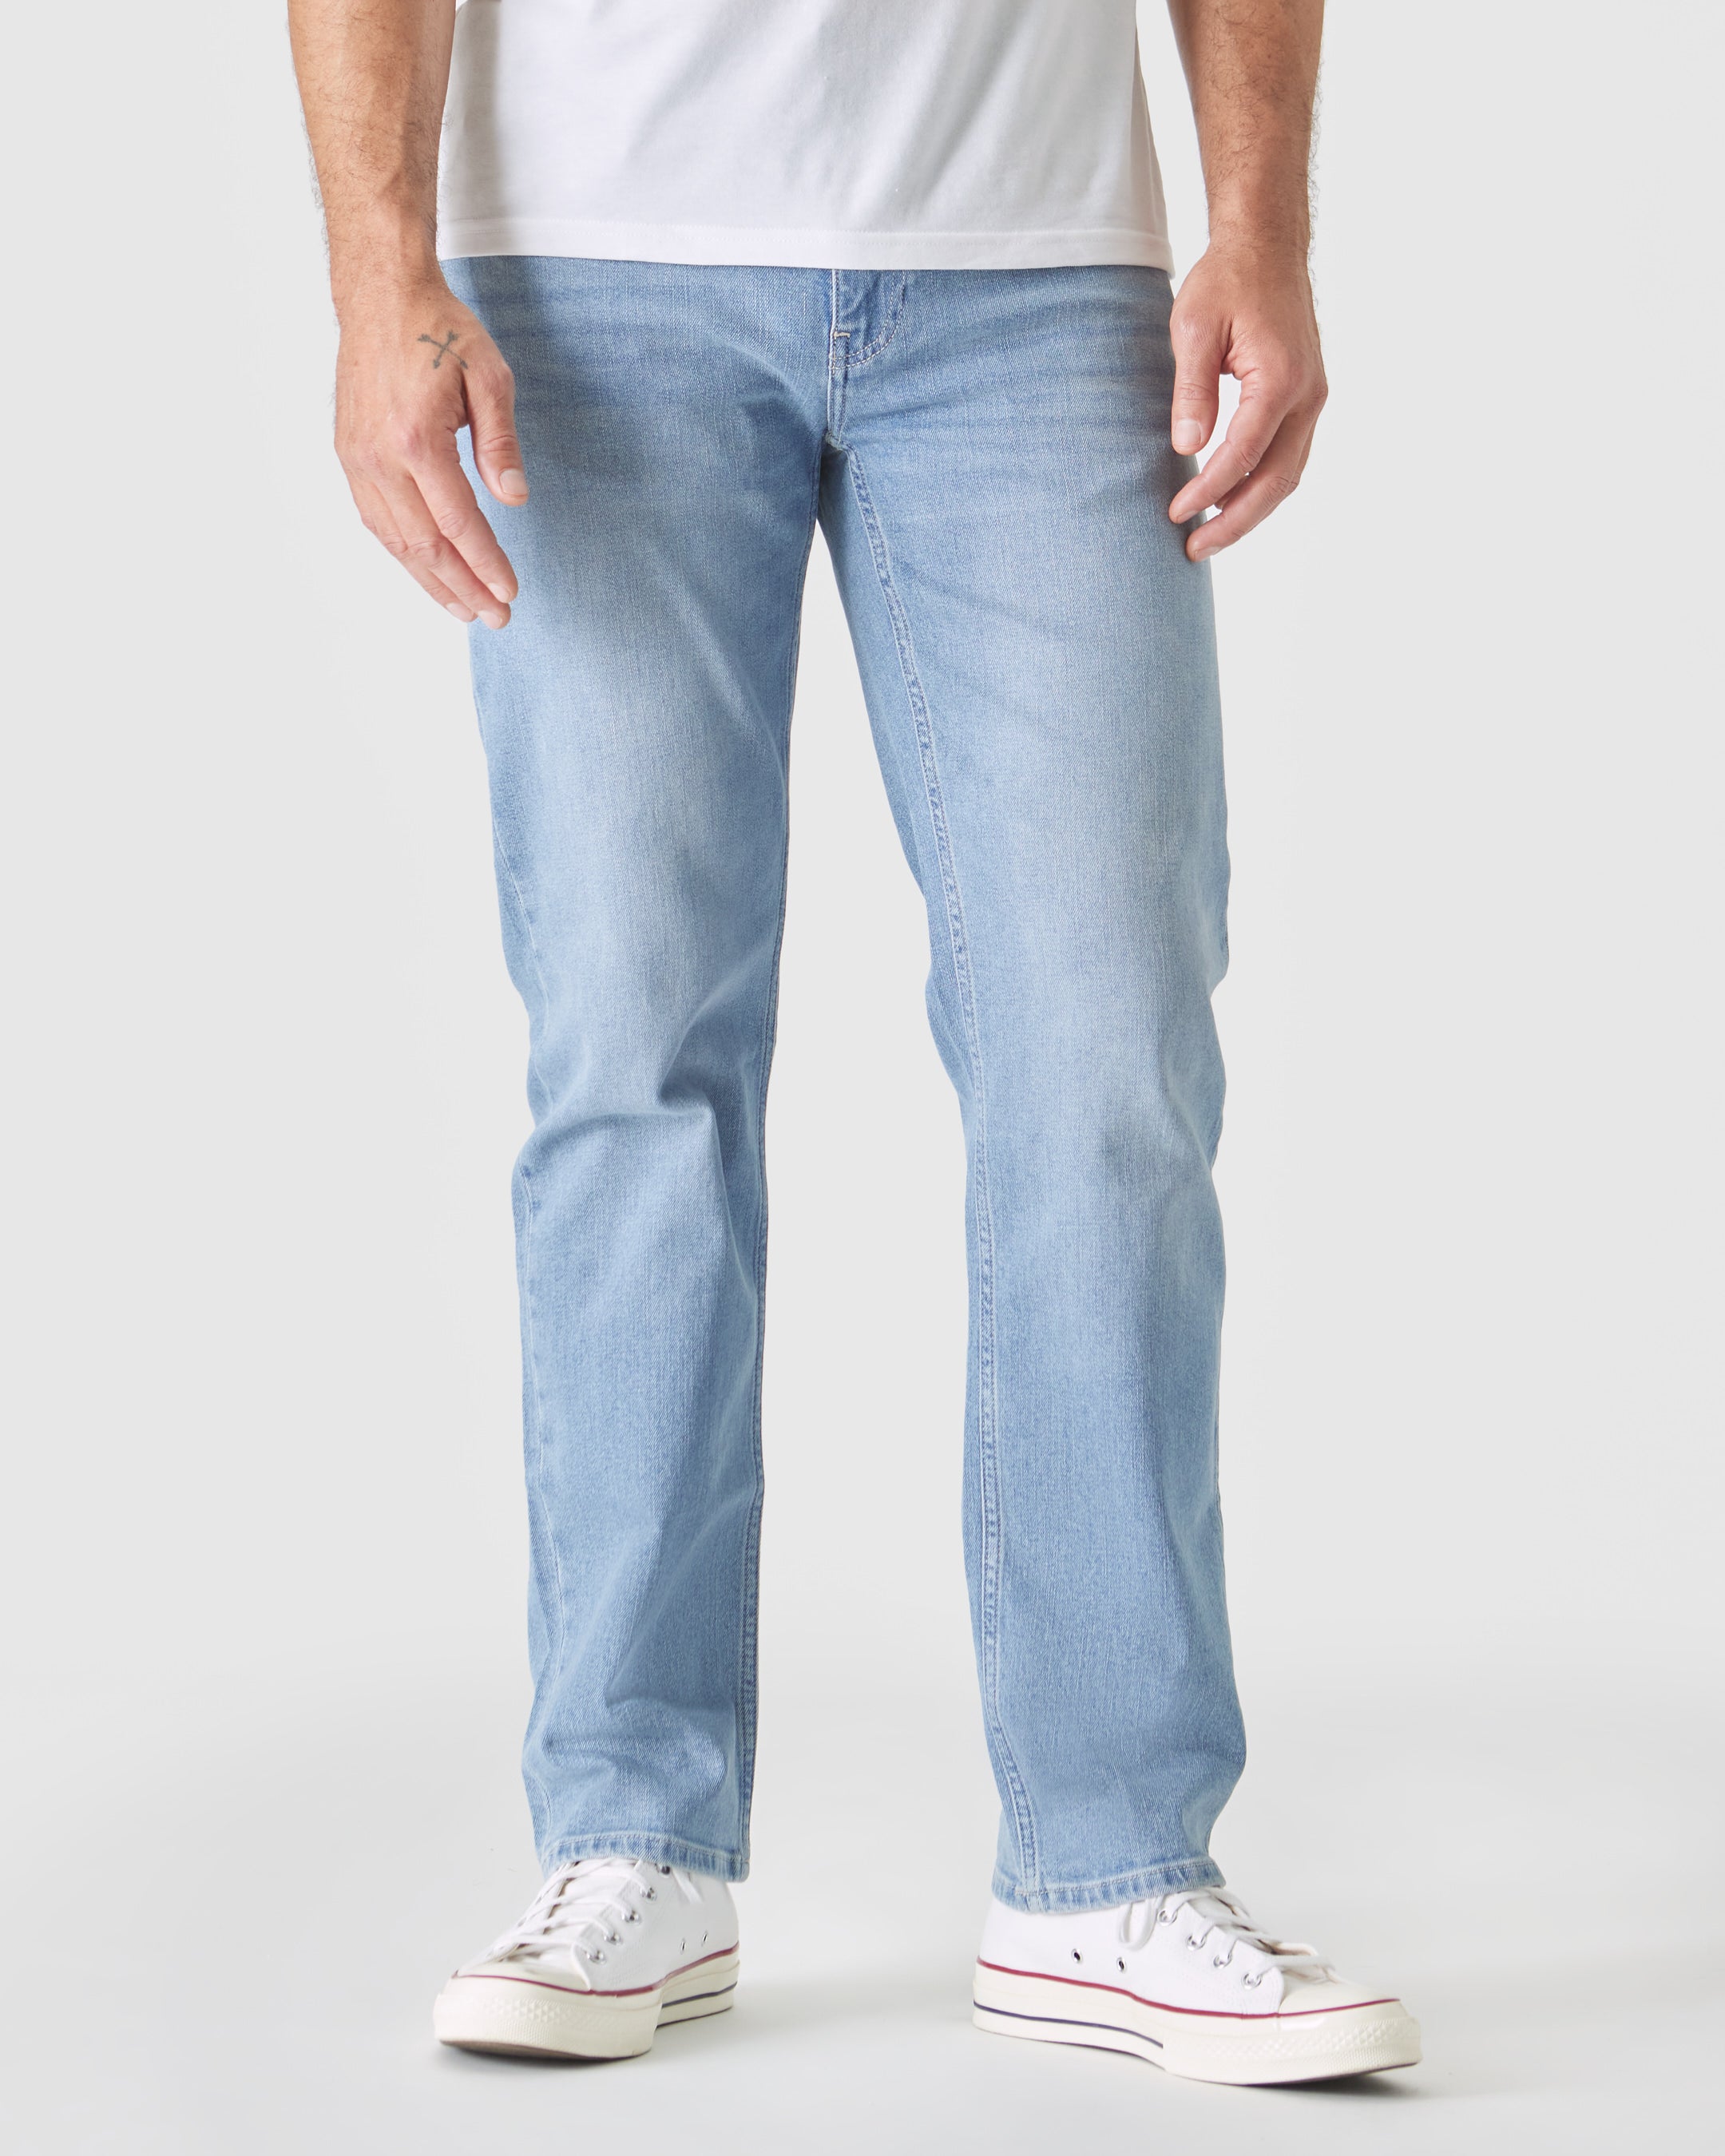 Industrial Indigo Washed Skinny Stretch Jean - Men's Jeans in Light Wash